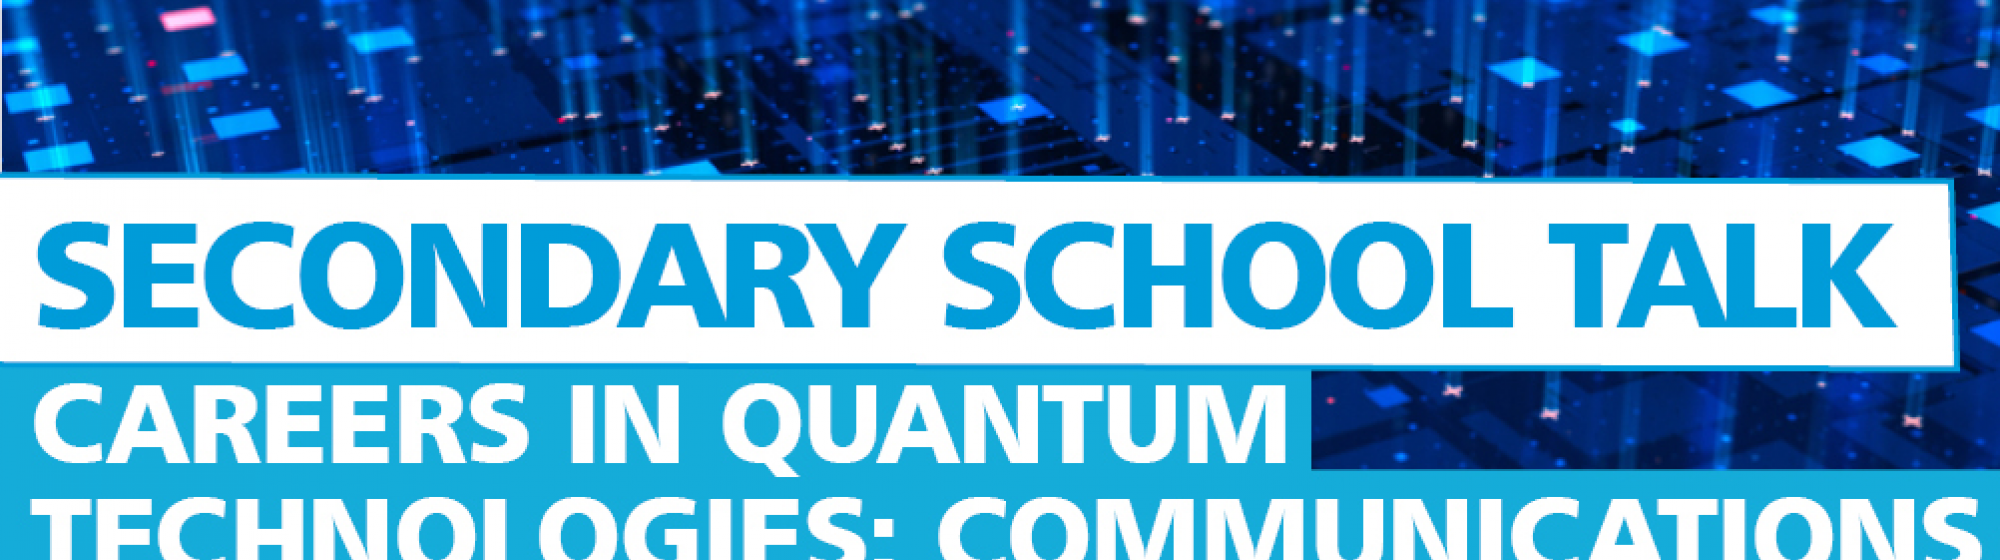 Secondary School Talk -  Careers in Quantum Technologies: Communications